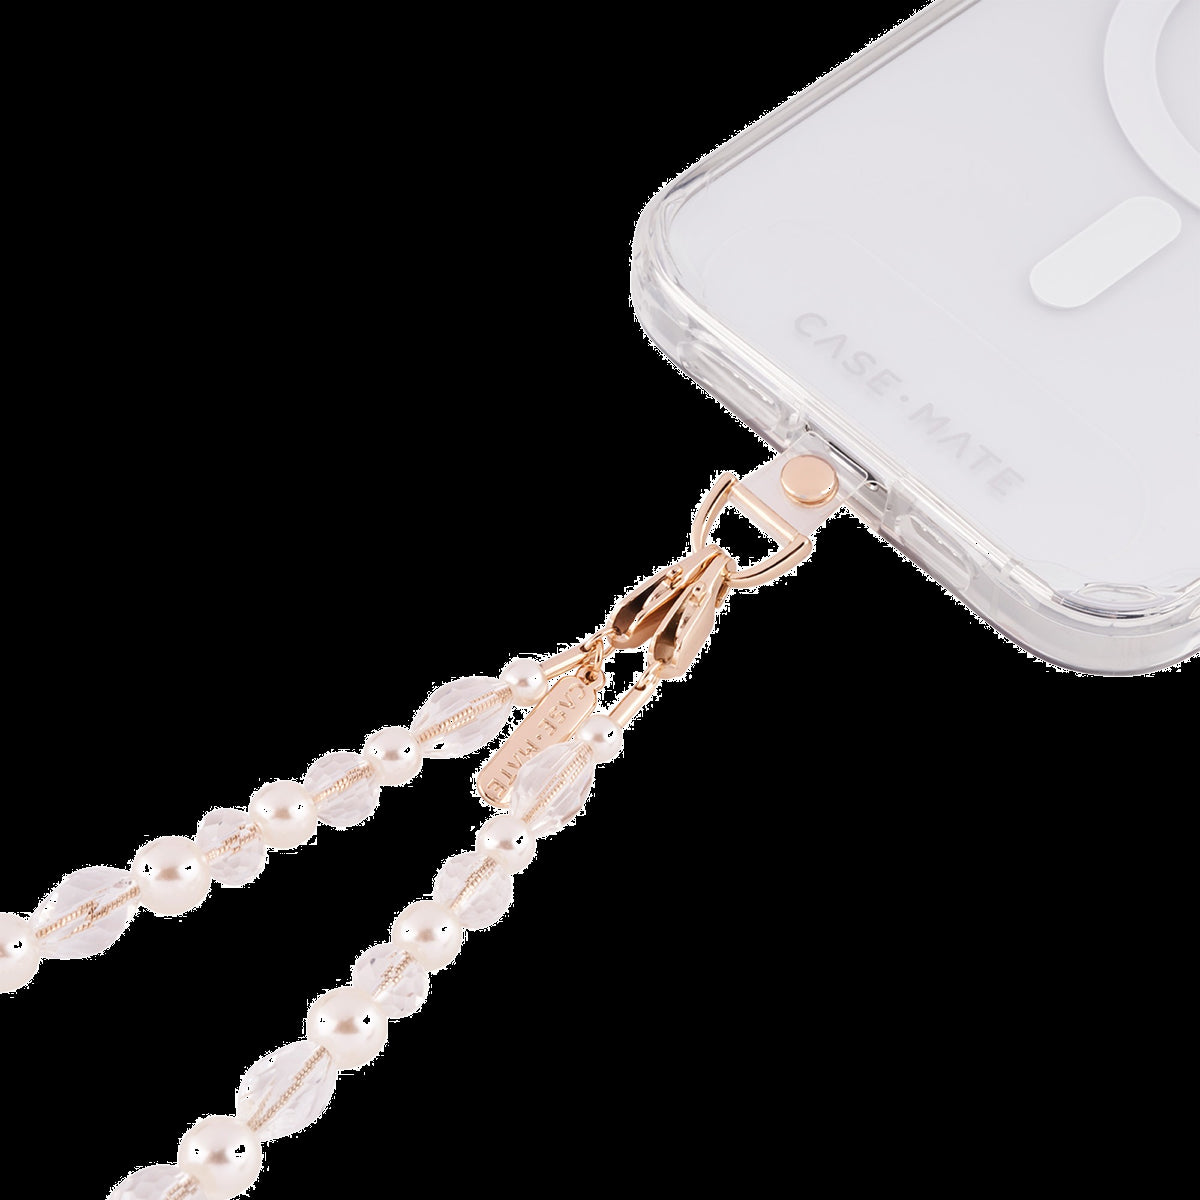 Universal Case-Mate Beaded Phone Wristlet - Crystal Pearl